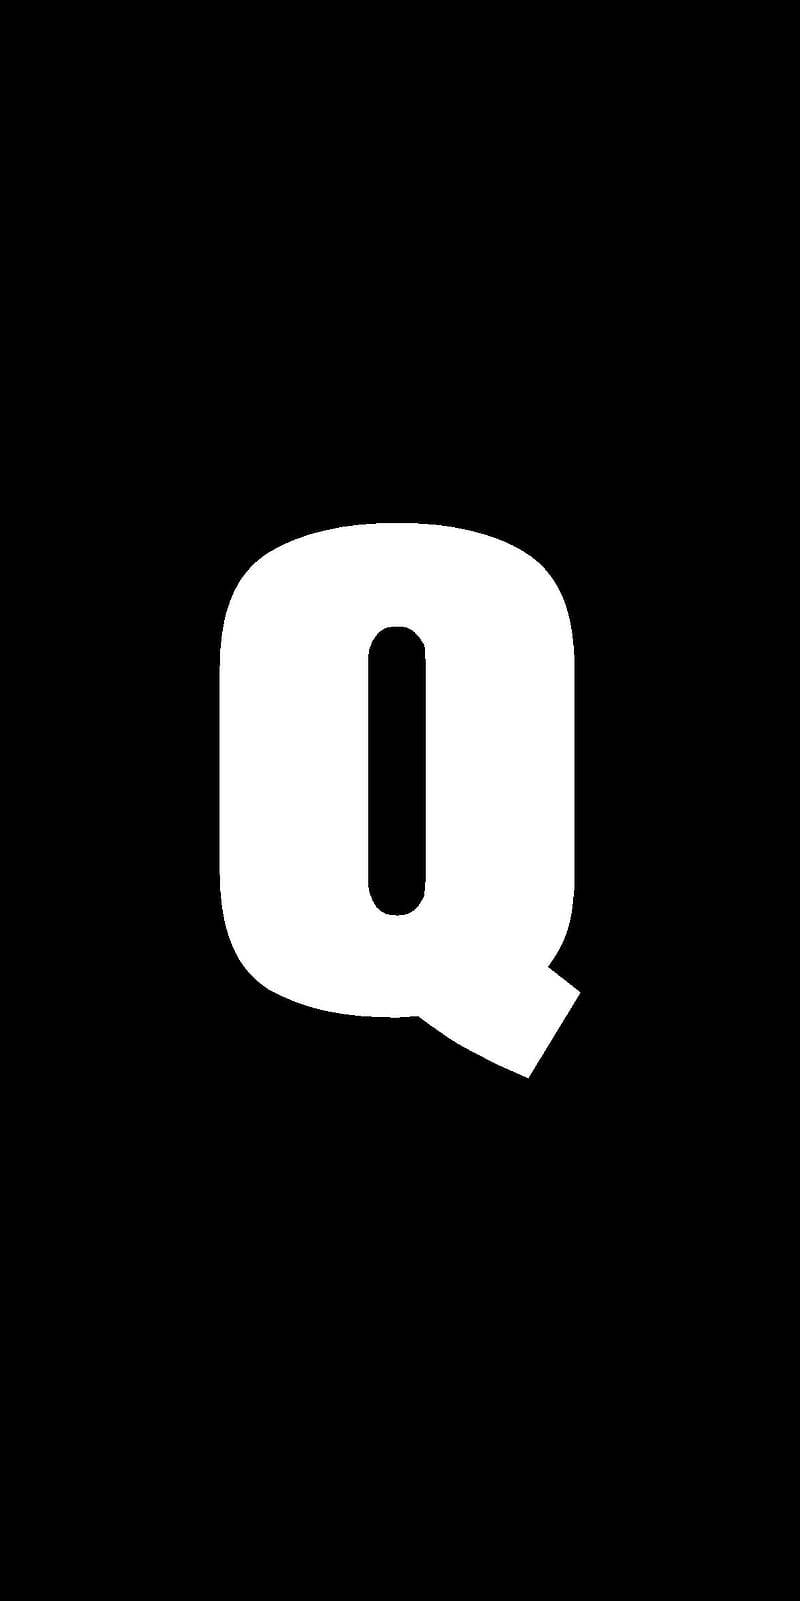 Black And White Letter Q Background